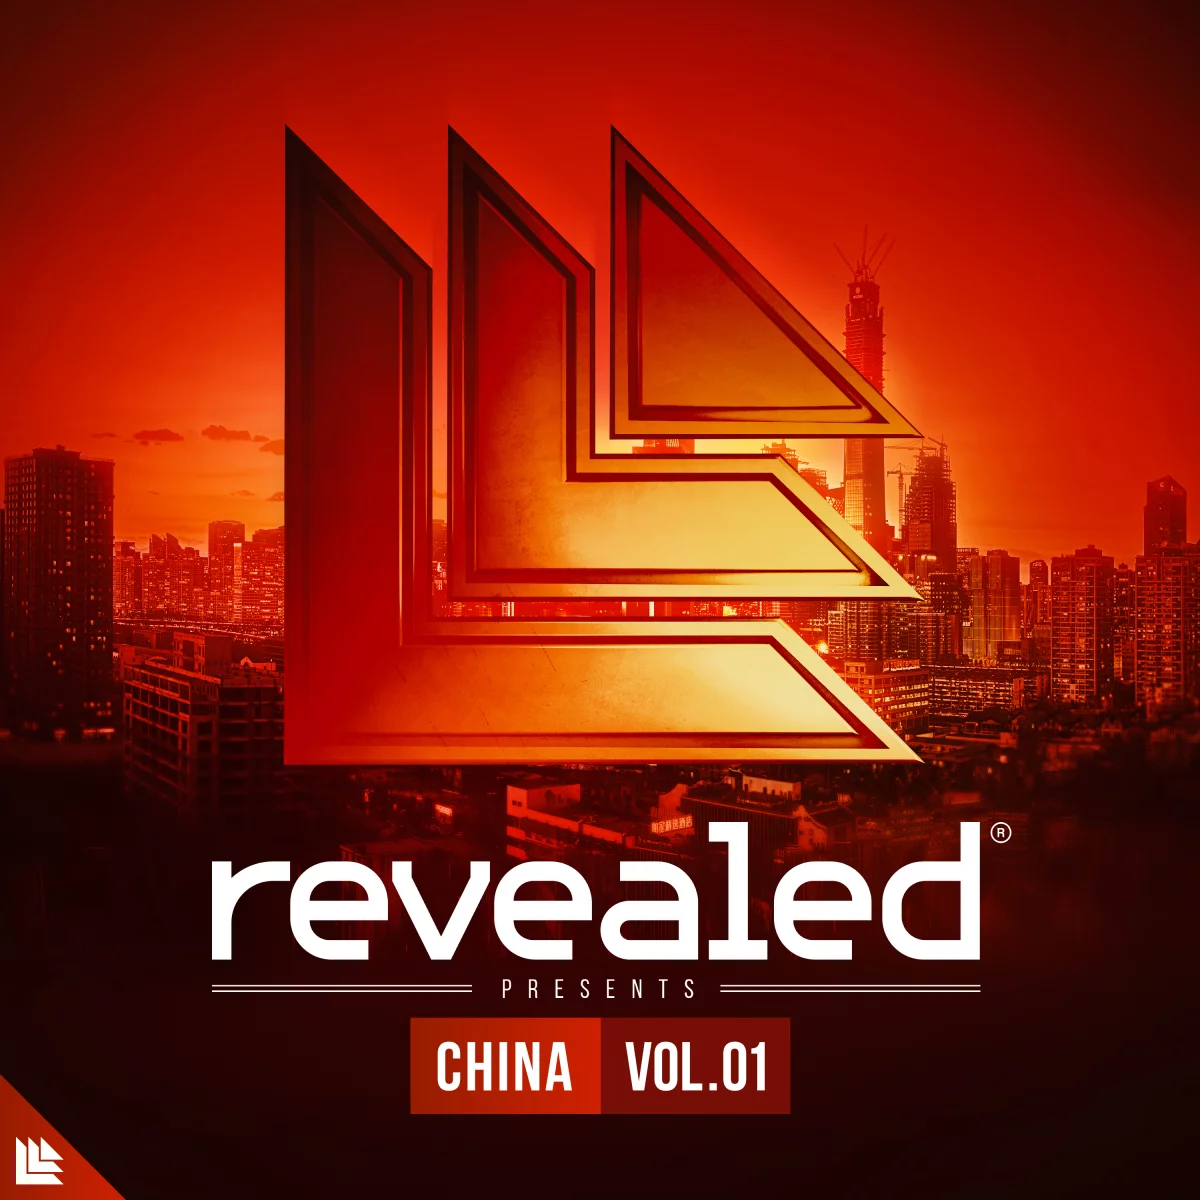 Revealed China Vol. 1 - revealedrec⁠ 